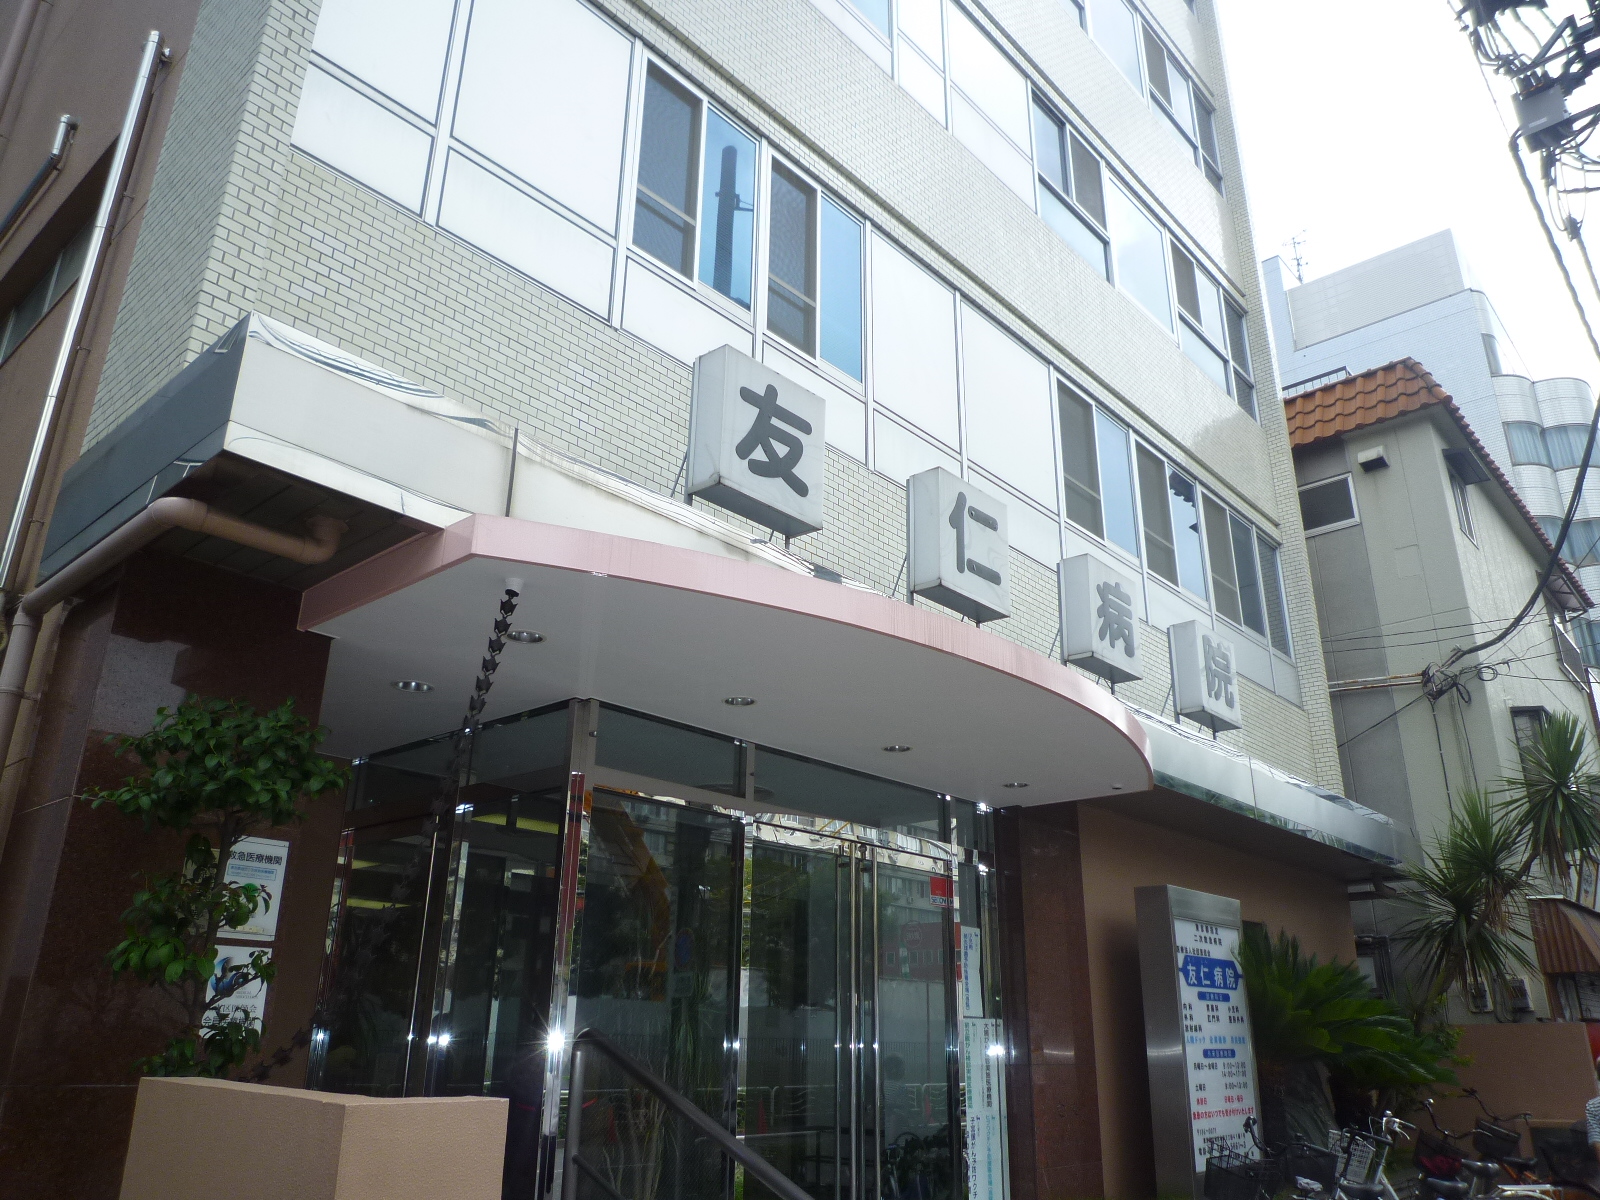 Hospital. 70m to medical corporation Association Eshin Kaiyu Hitoshi hospital (hospital)